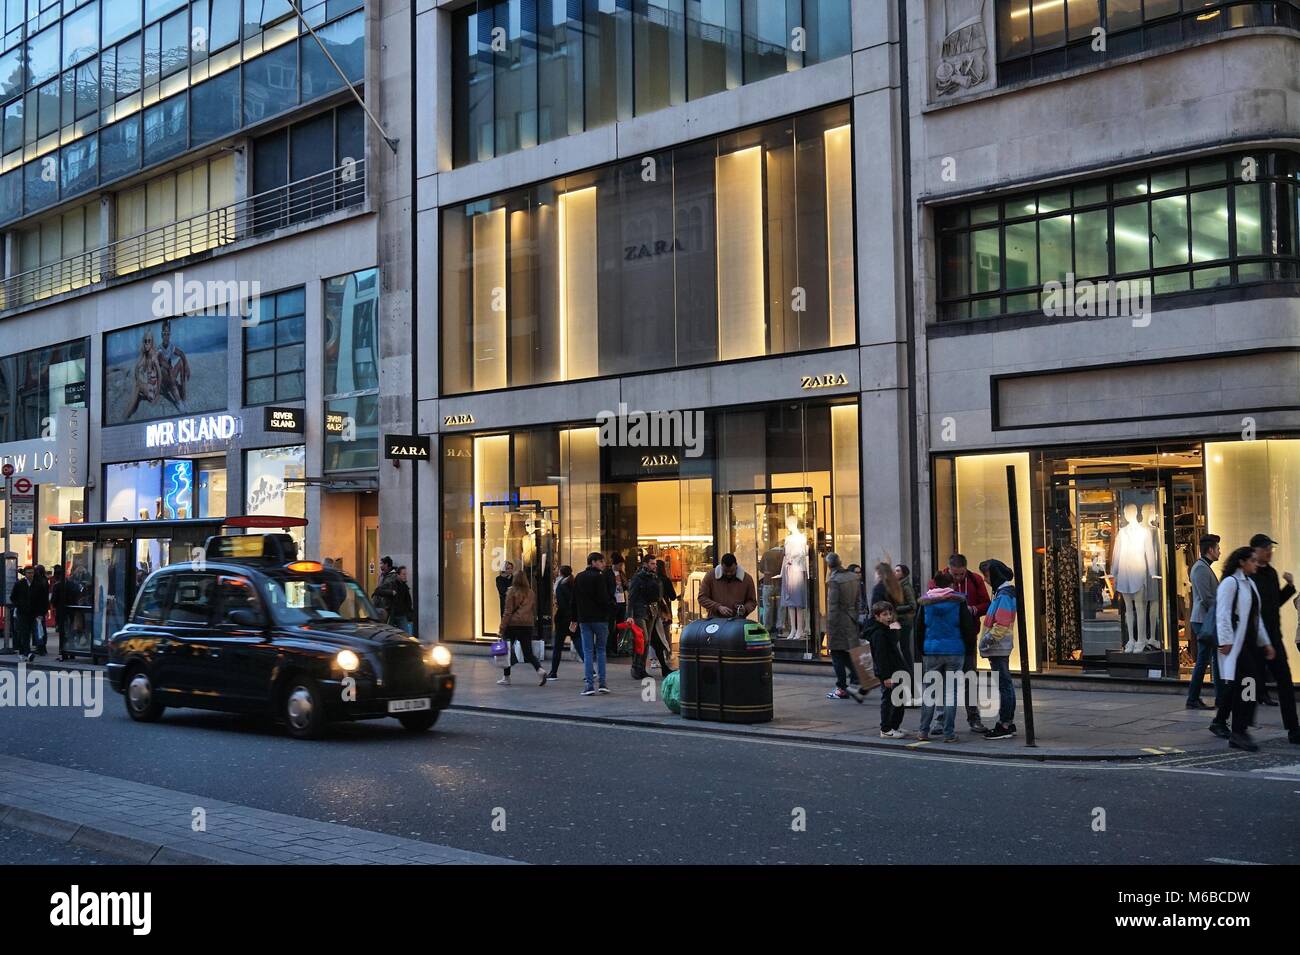 Zara Shop London High Resolution Stock 